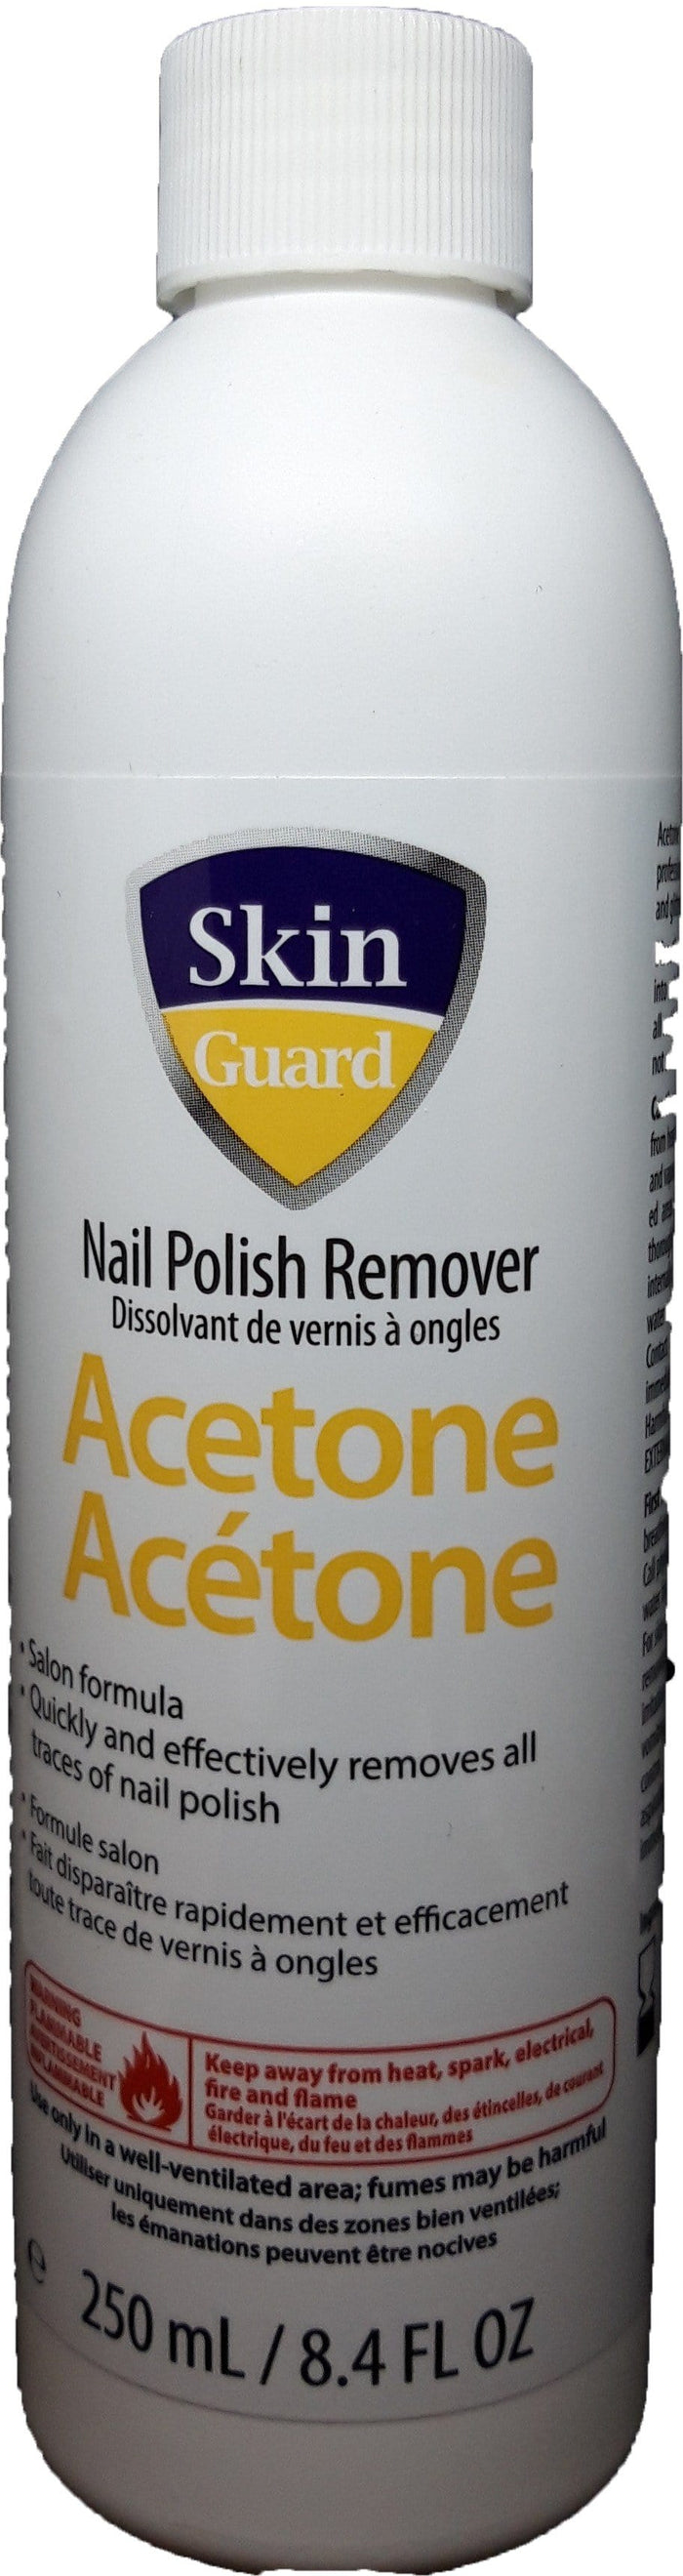 Skin Guard Acetone Nail Polish Remover 250 ml